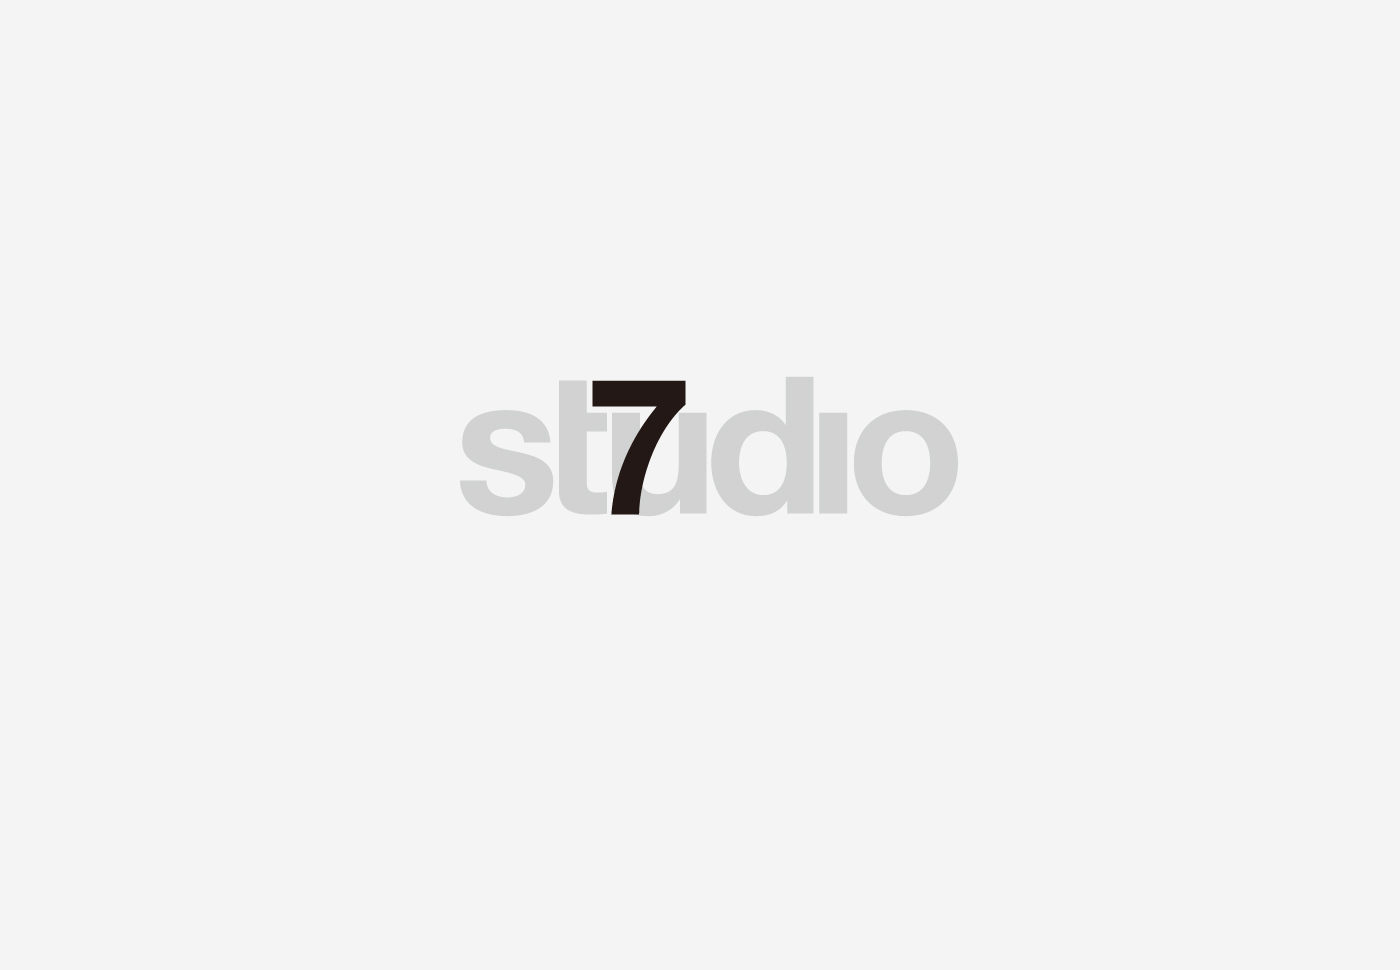 Studio 7 – visual identity